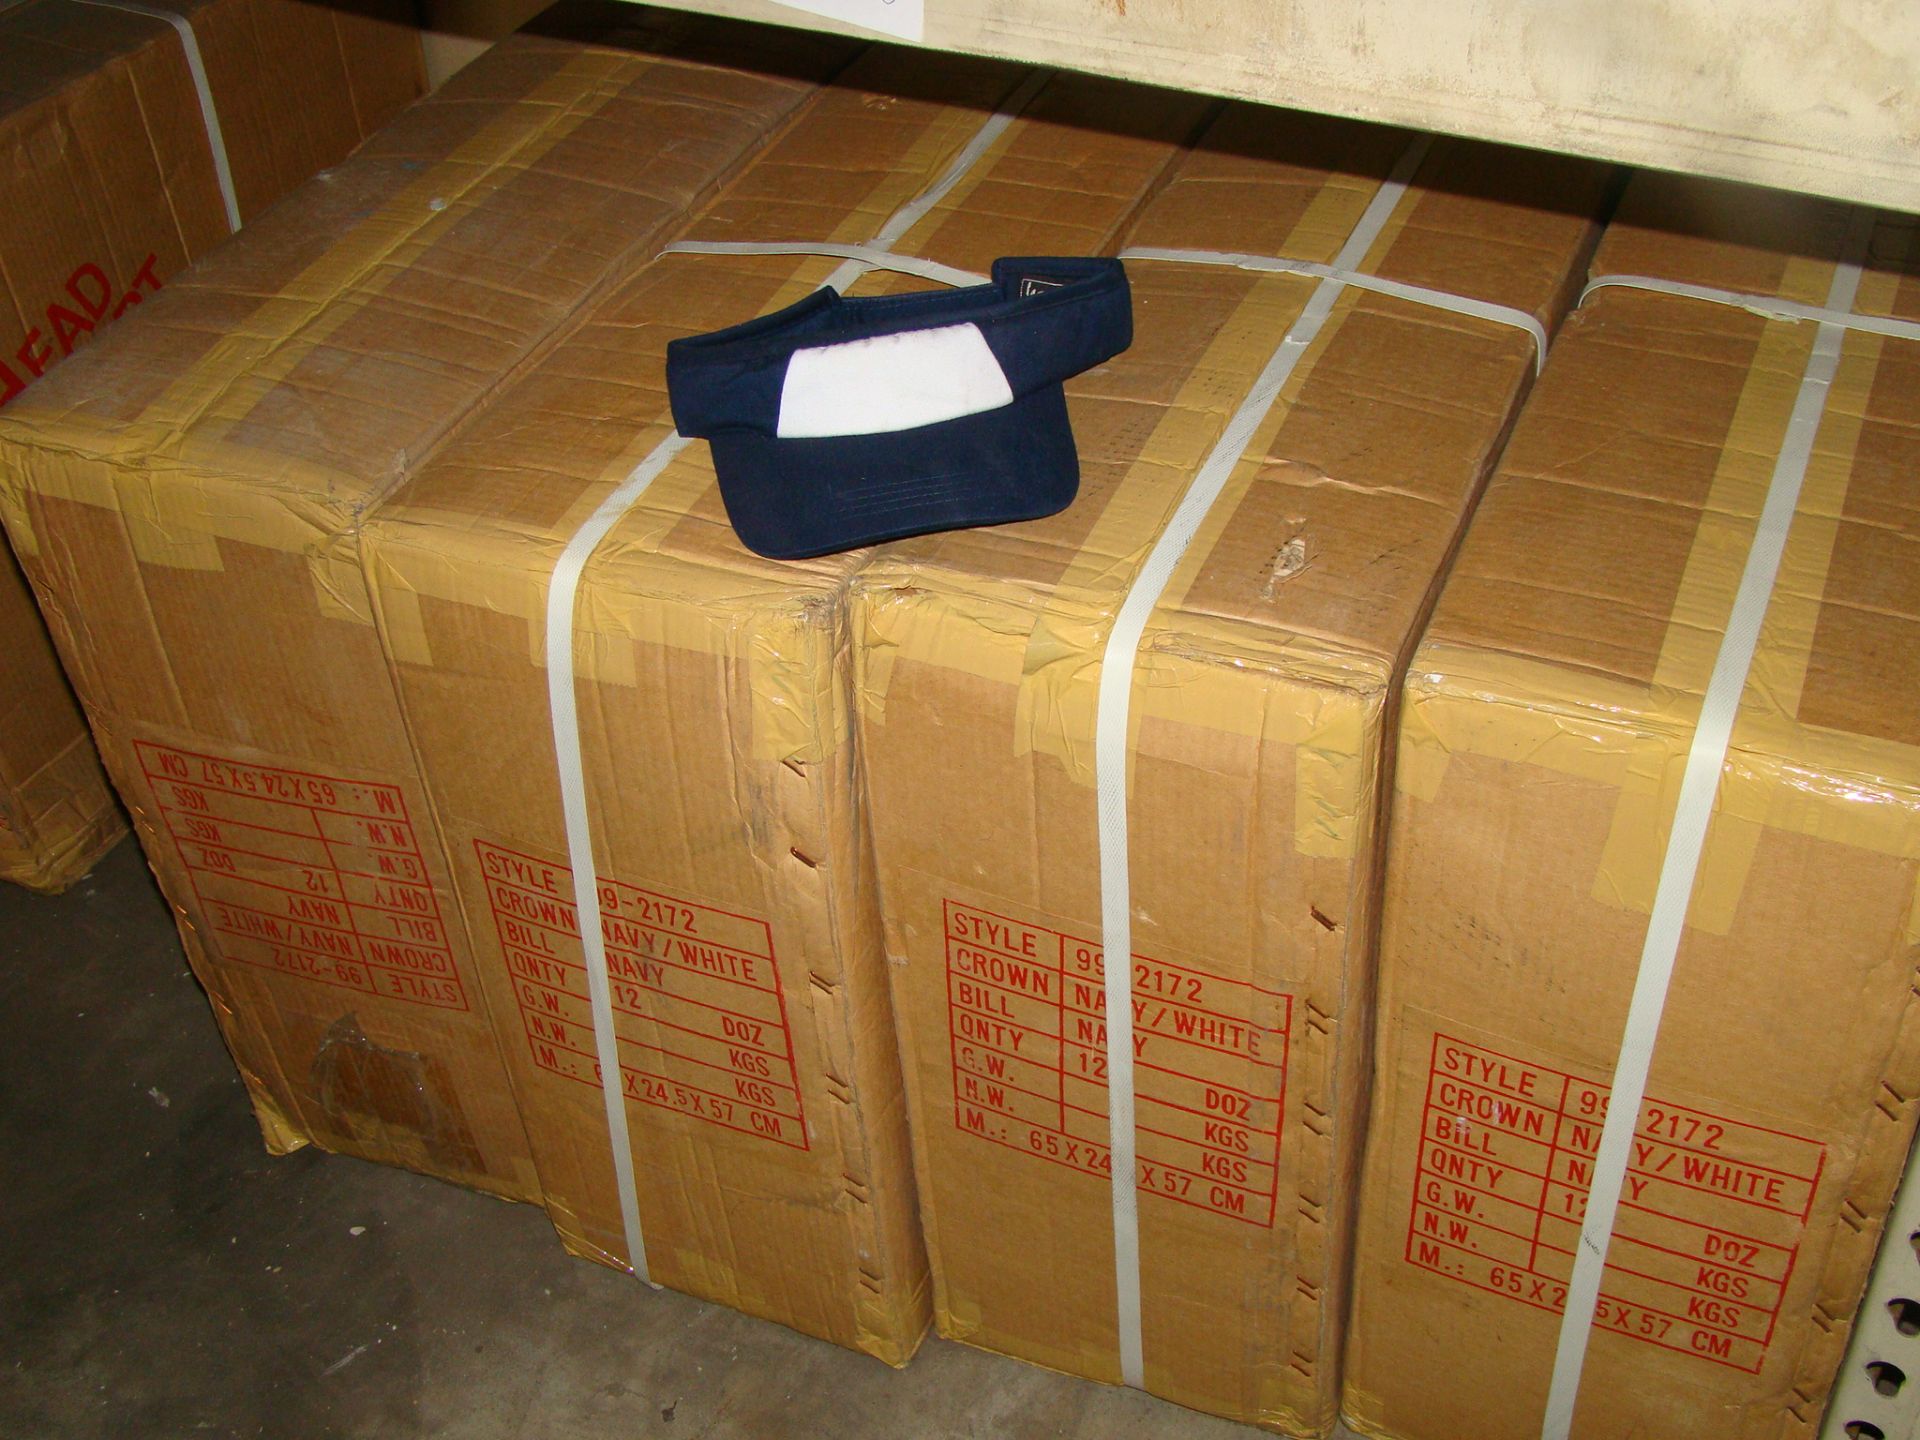 4 Boxes of Navy/White visors (144 per box)